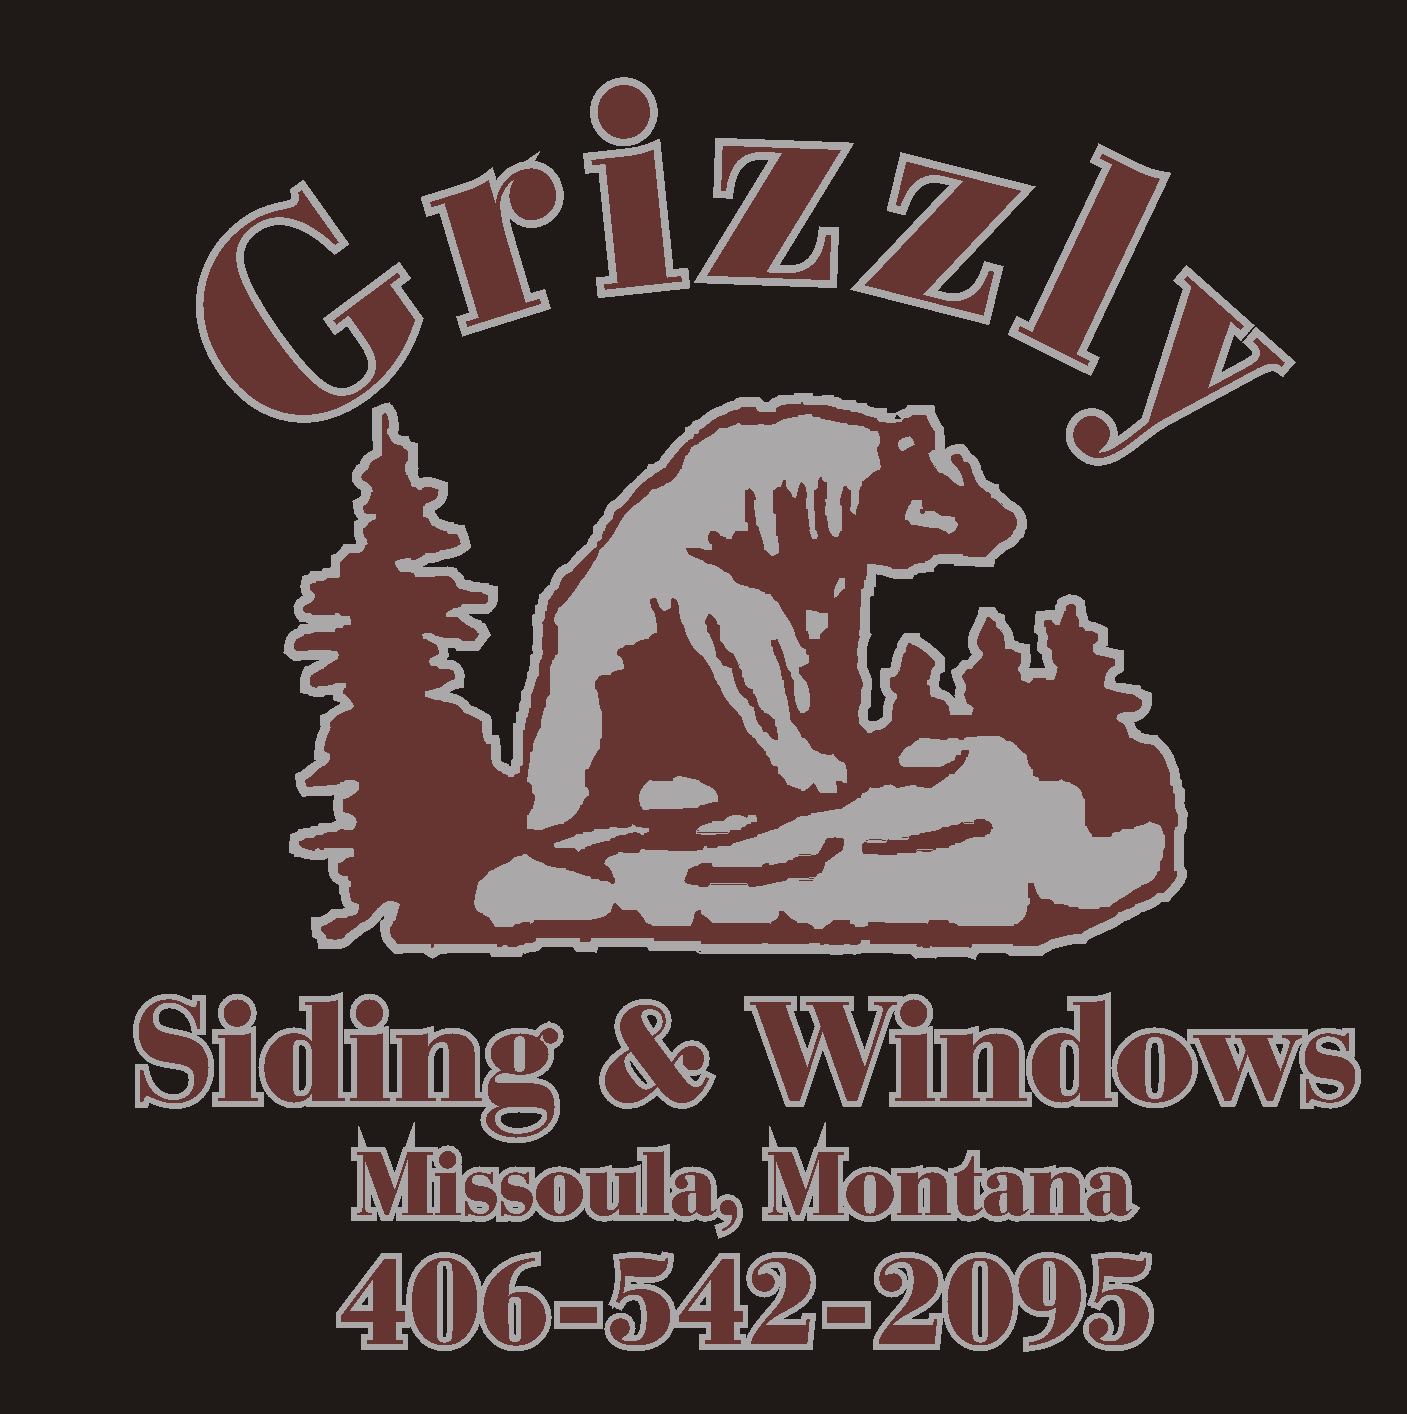 Company logo of Grizzly Siding & Windows